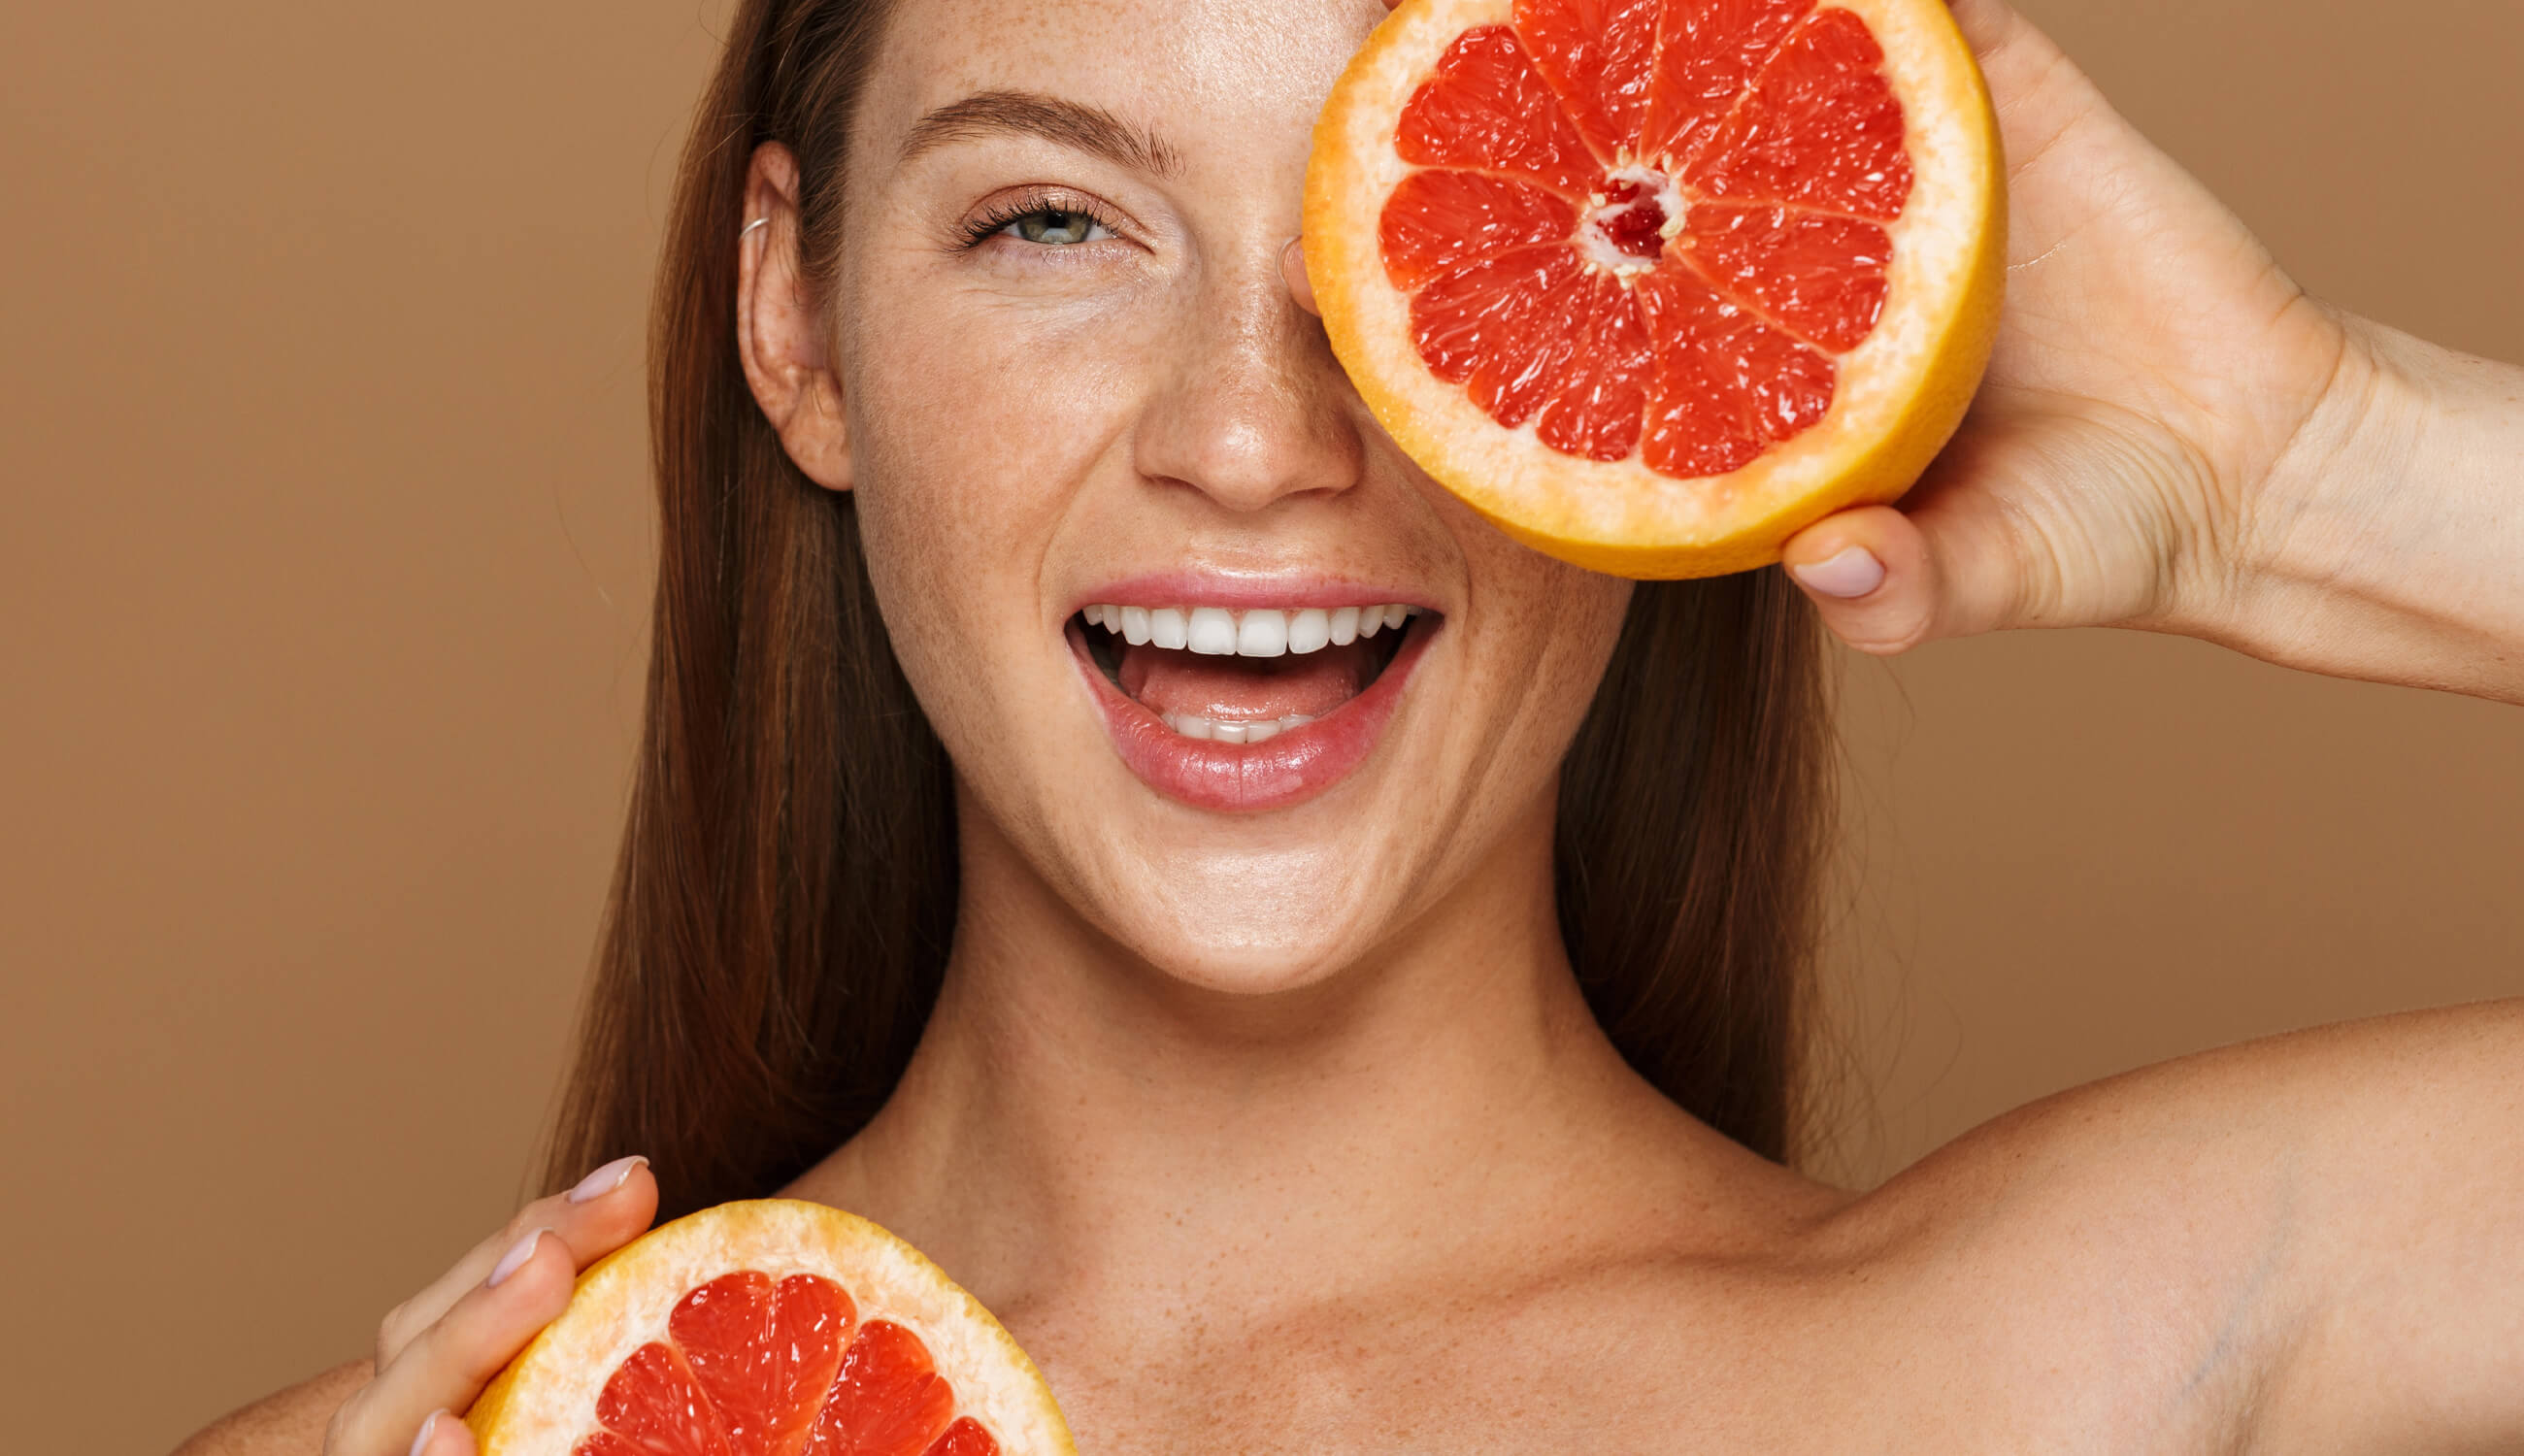 5 Grapefruit Juice Benefits for Your Health